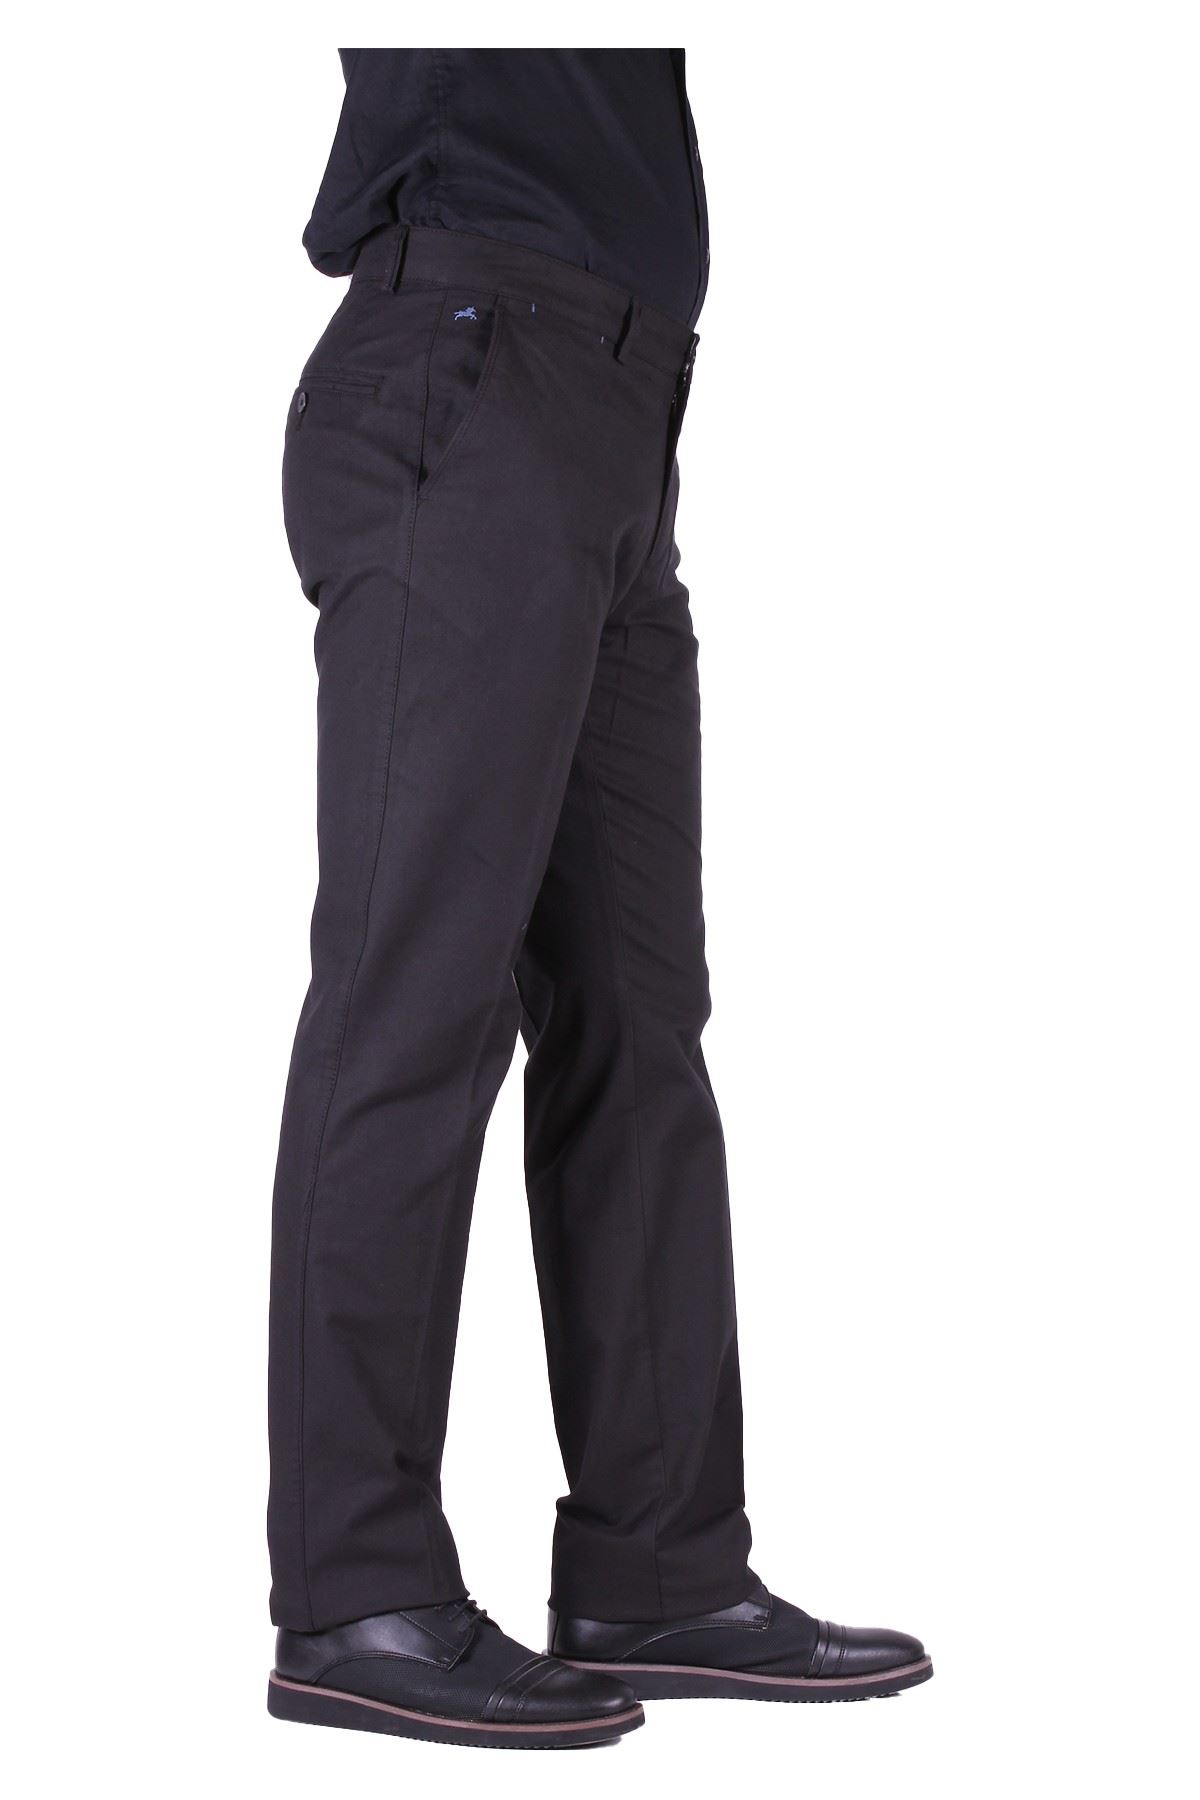 Giyinsen Erkek Siyah Klasik Pantolon - 23KI53008043